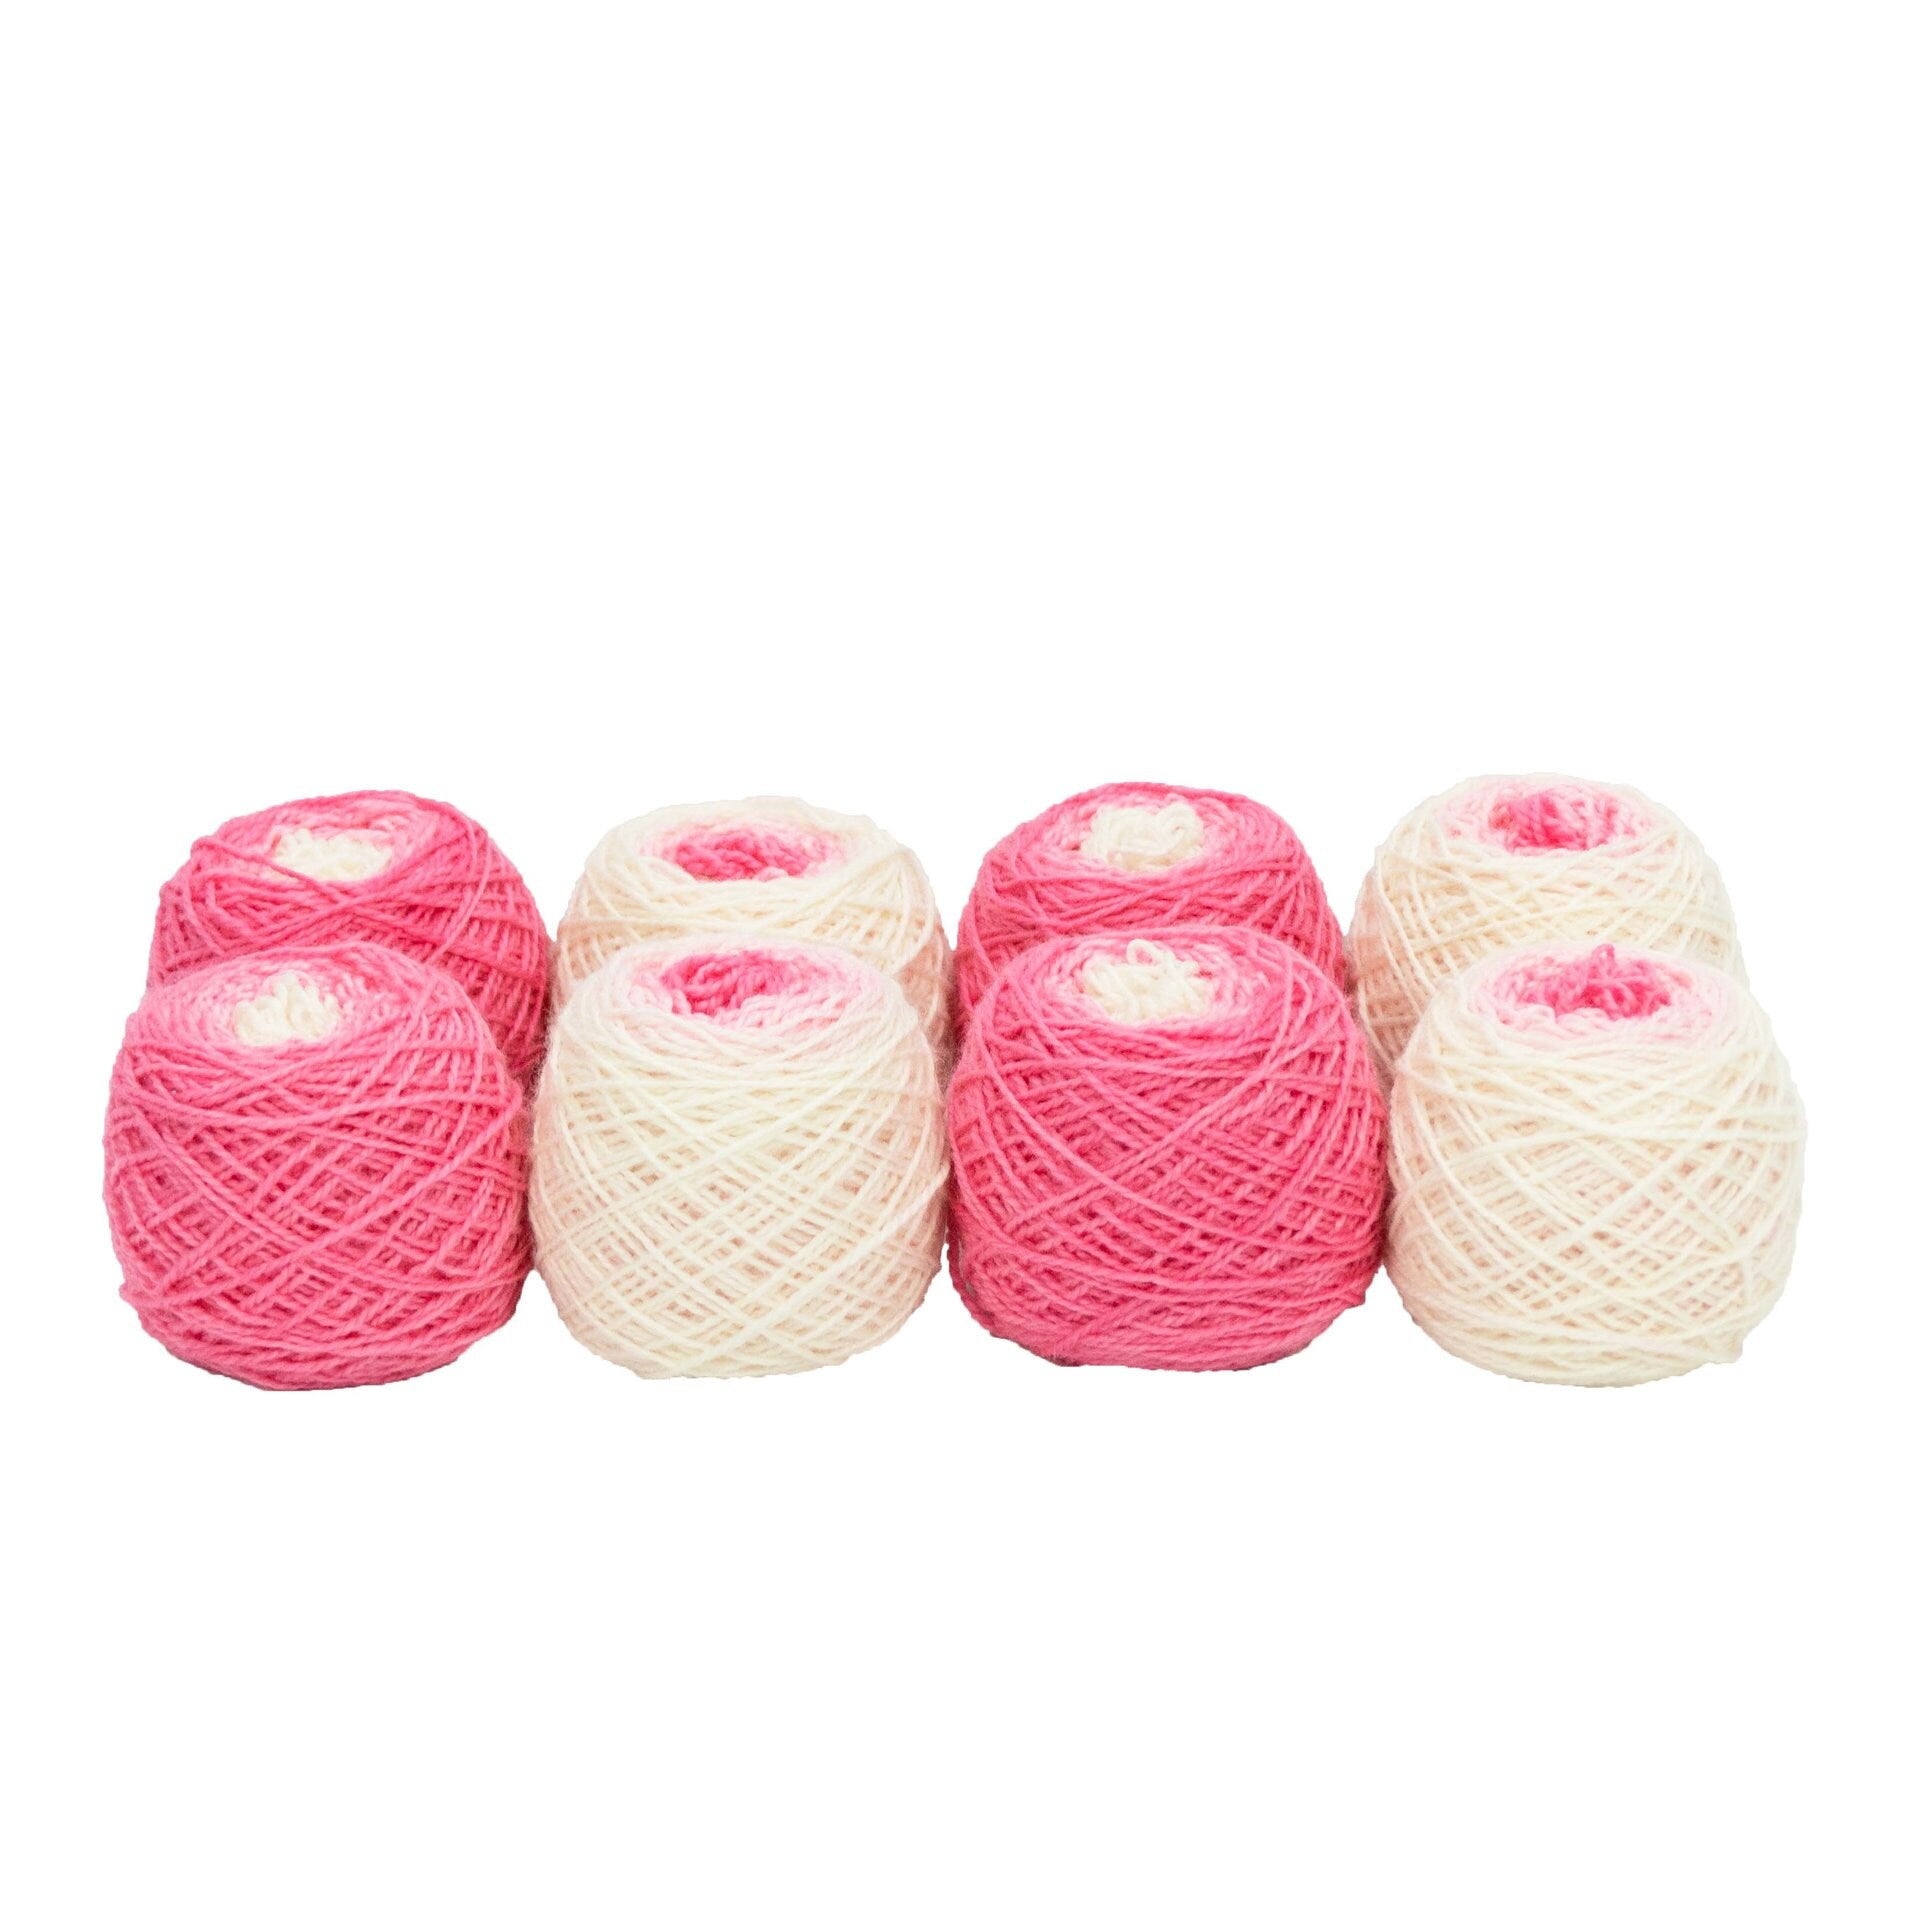 Shorty Sock Twins " Clara's Dress " - Lleap SW Merino/Nylon Handpainted Semisolid Gradient Sock Yarn Set